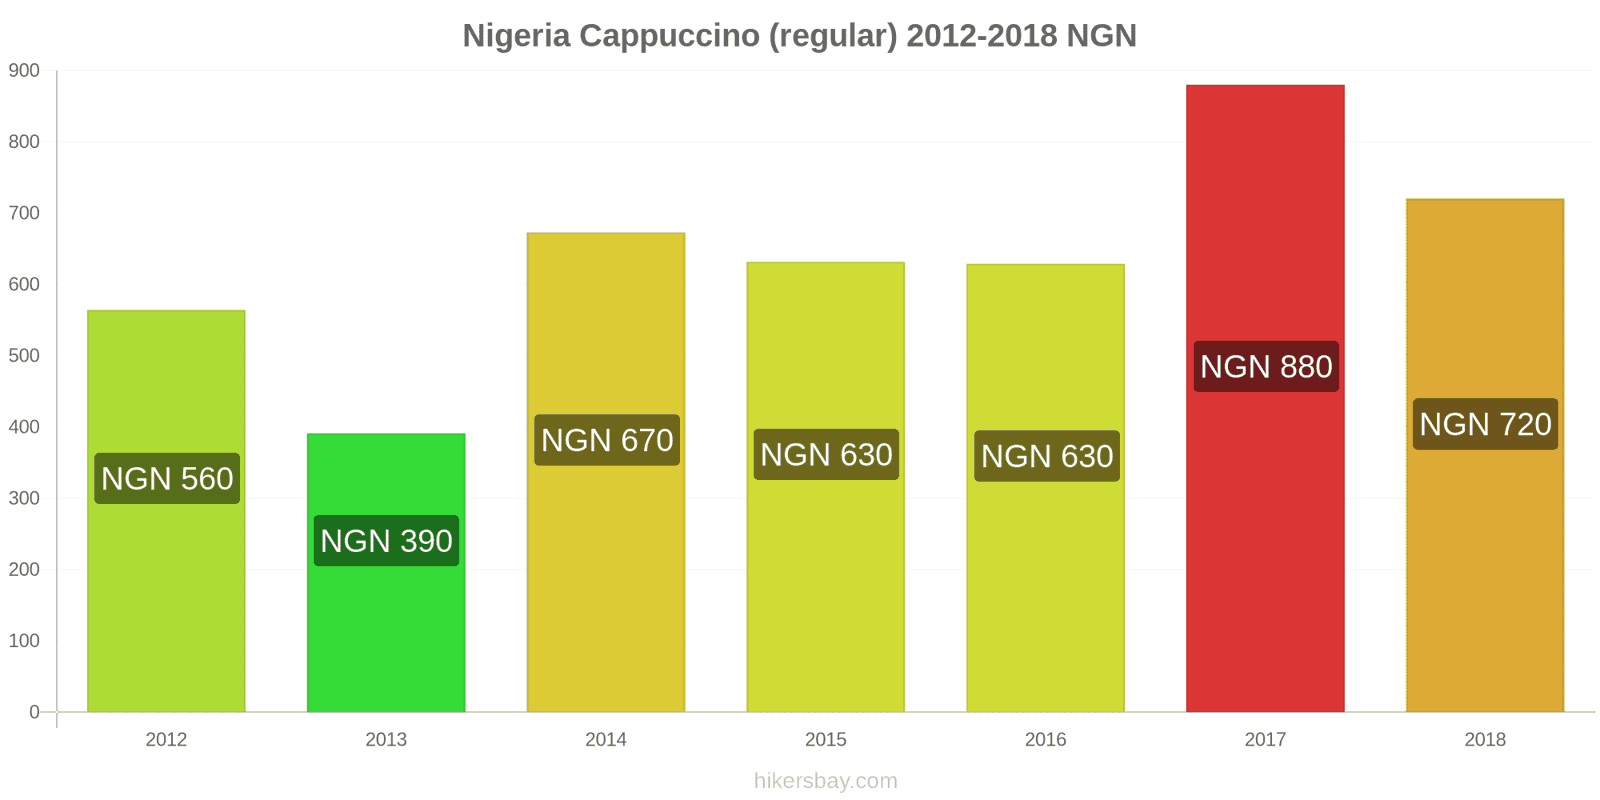 Nigeria price changes Cappuccino hikersbay.com